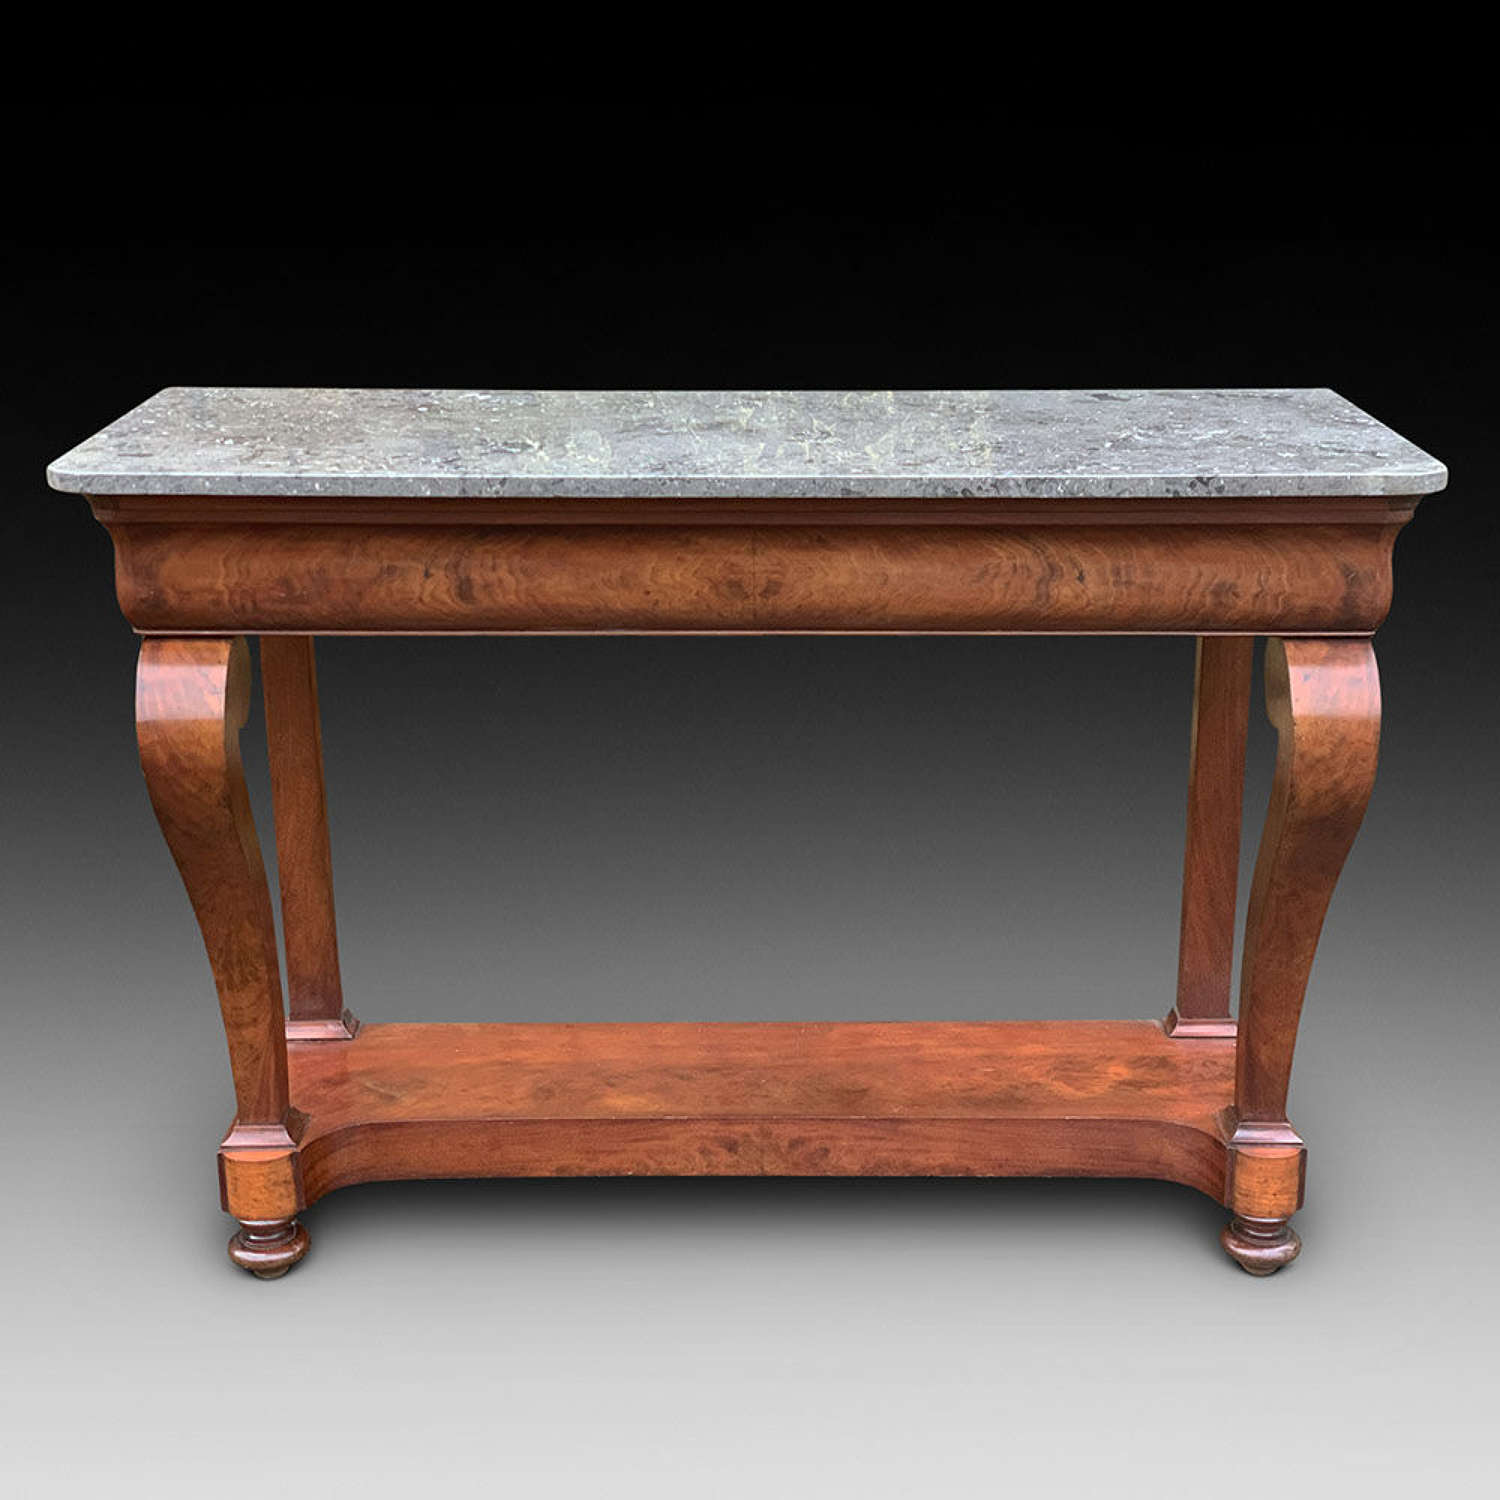 Good Quality Mahogany Console Table c.1860